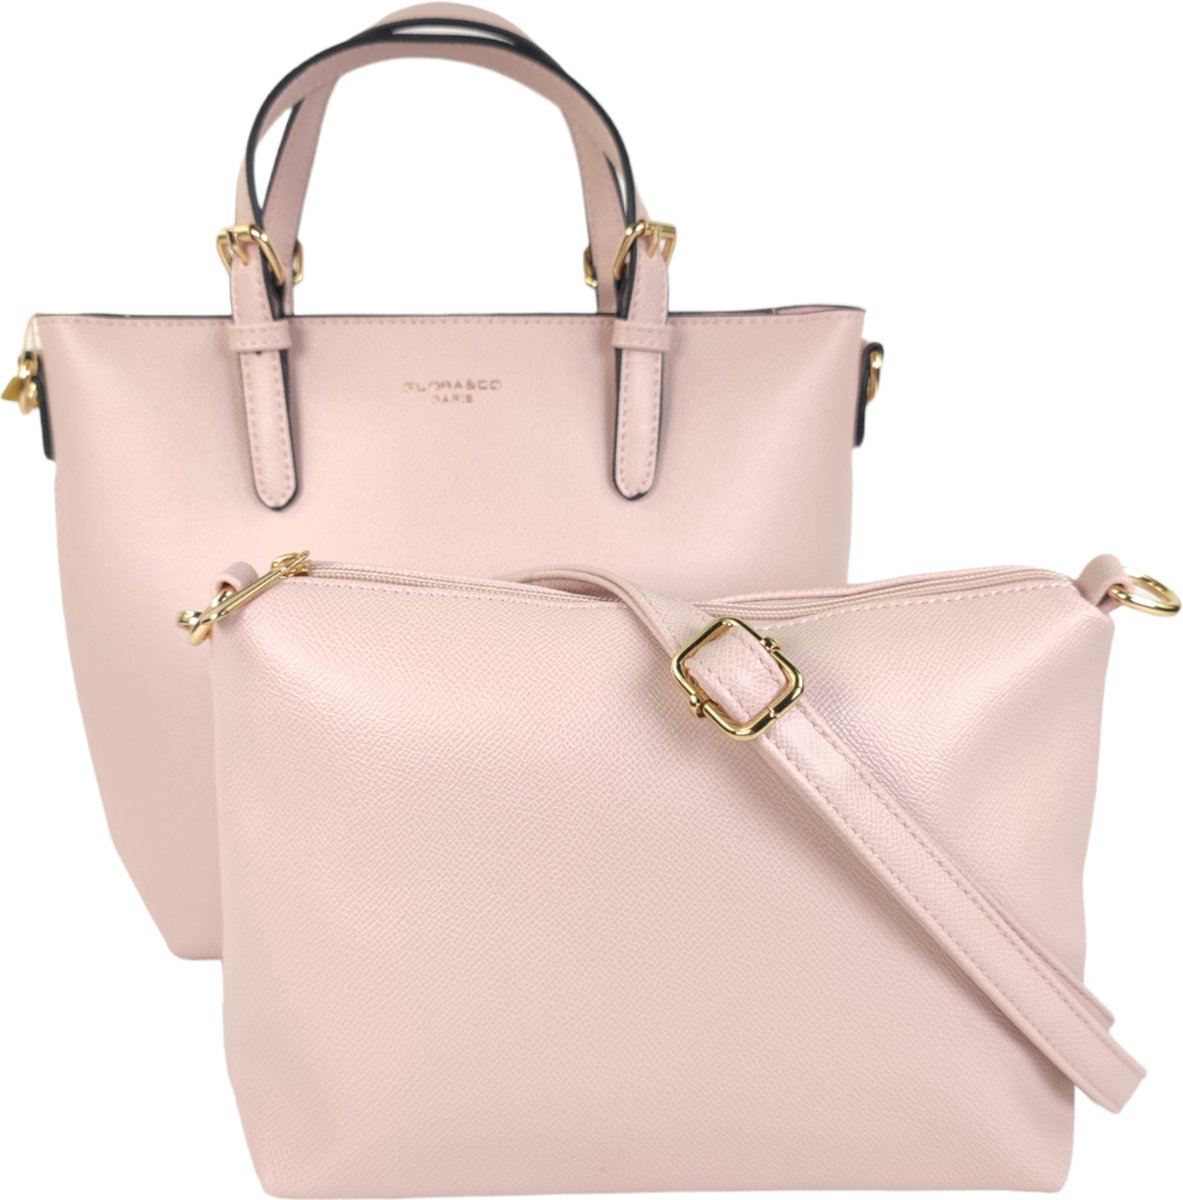 Flora&Co - Paris - Tas in tas/bag in bag - handtas/crossbody roze/rose